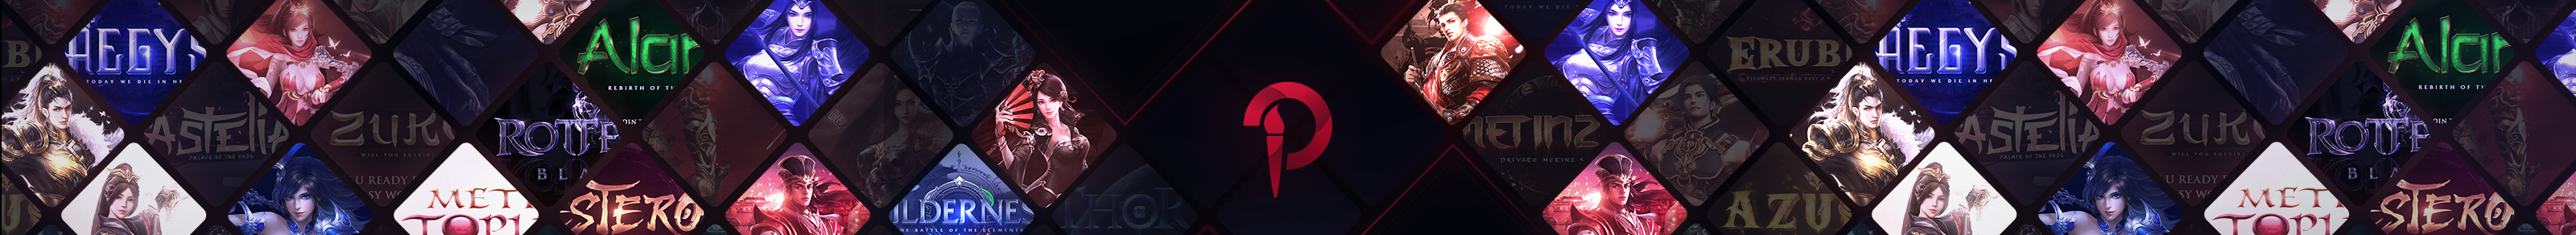 PIXARTS STUDIO's profile banner